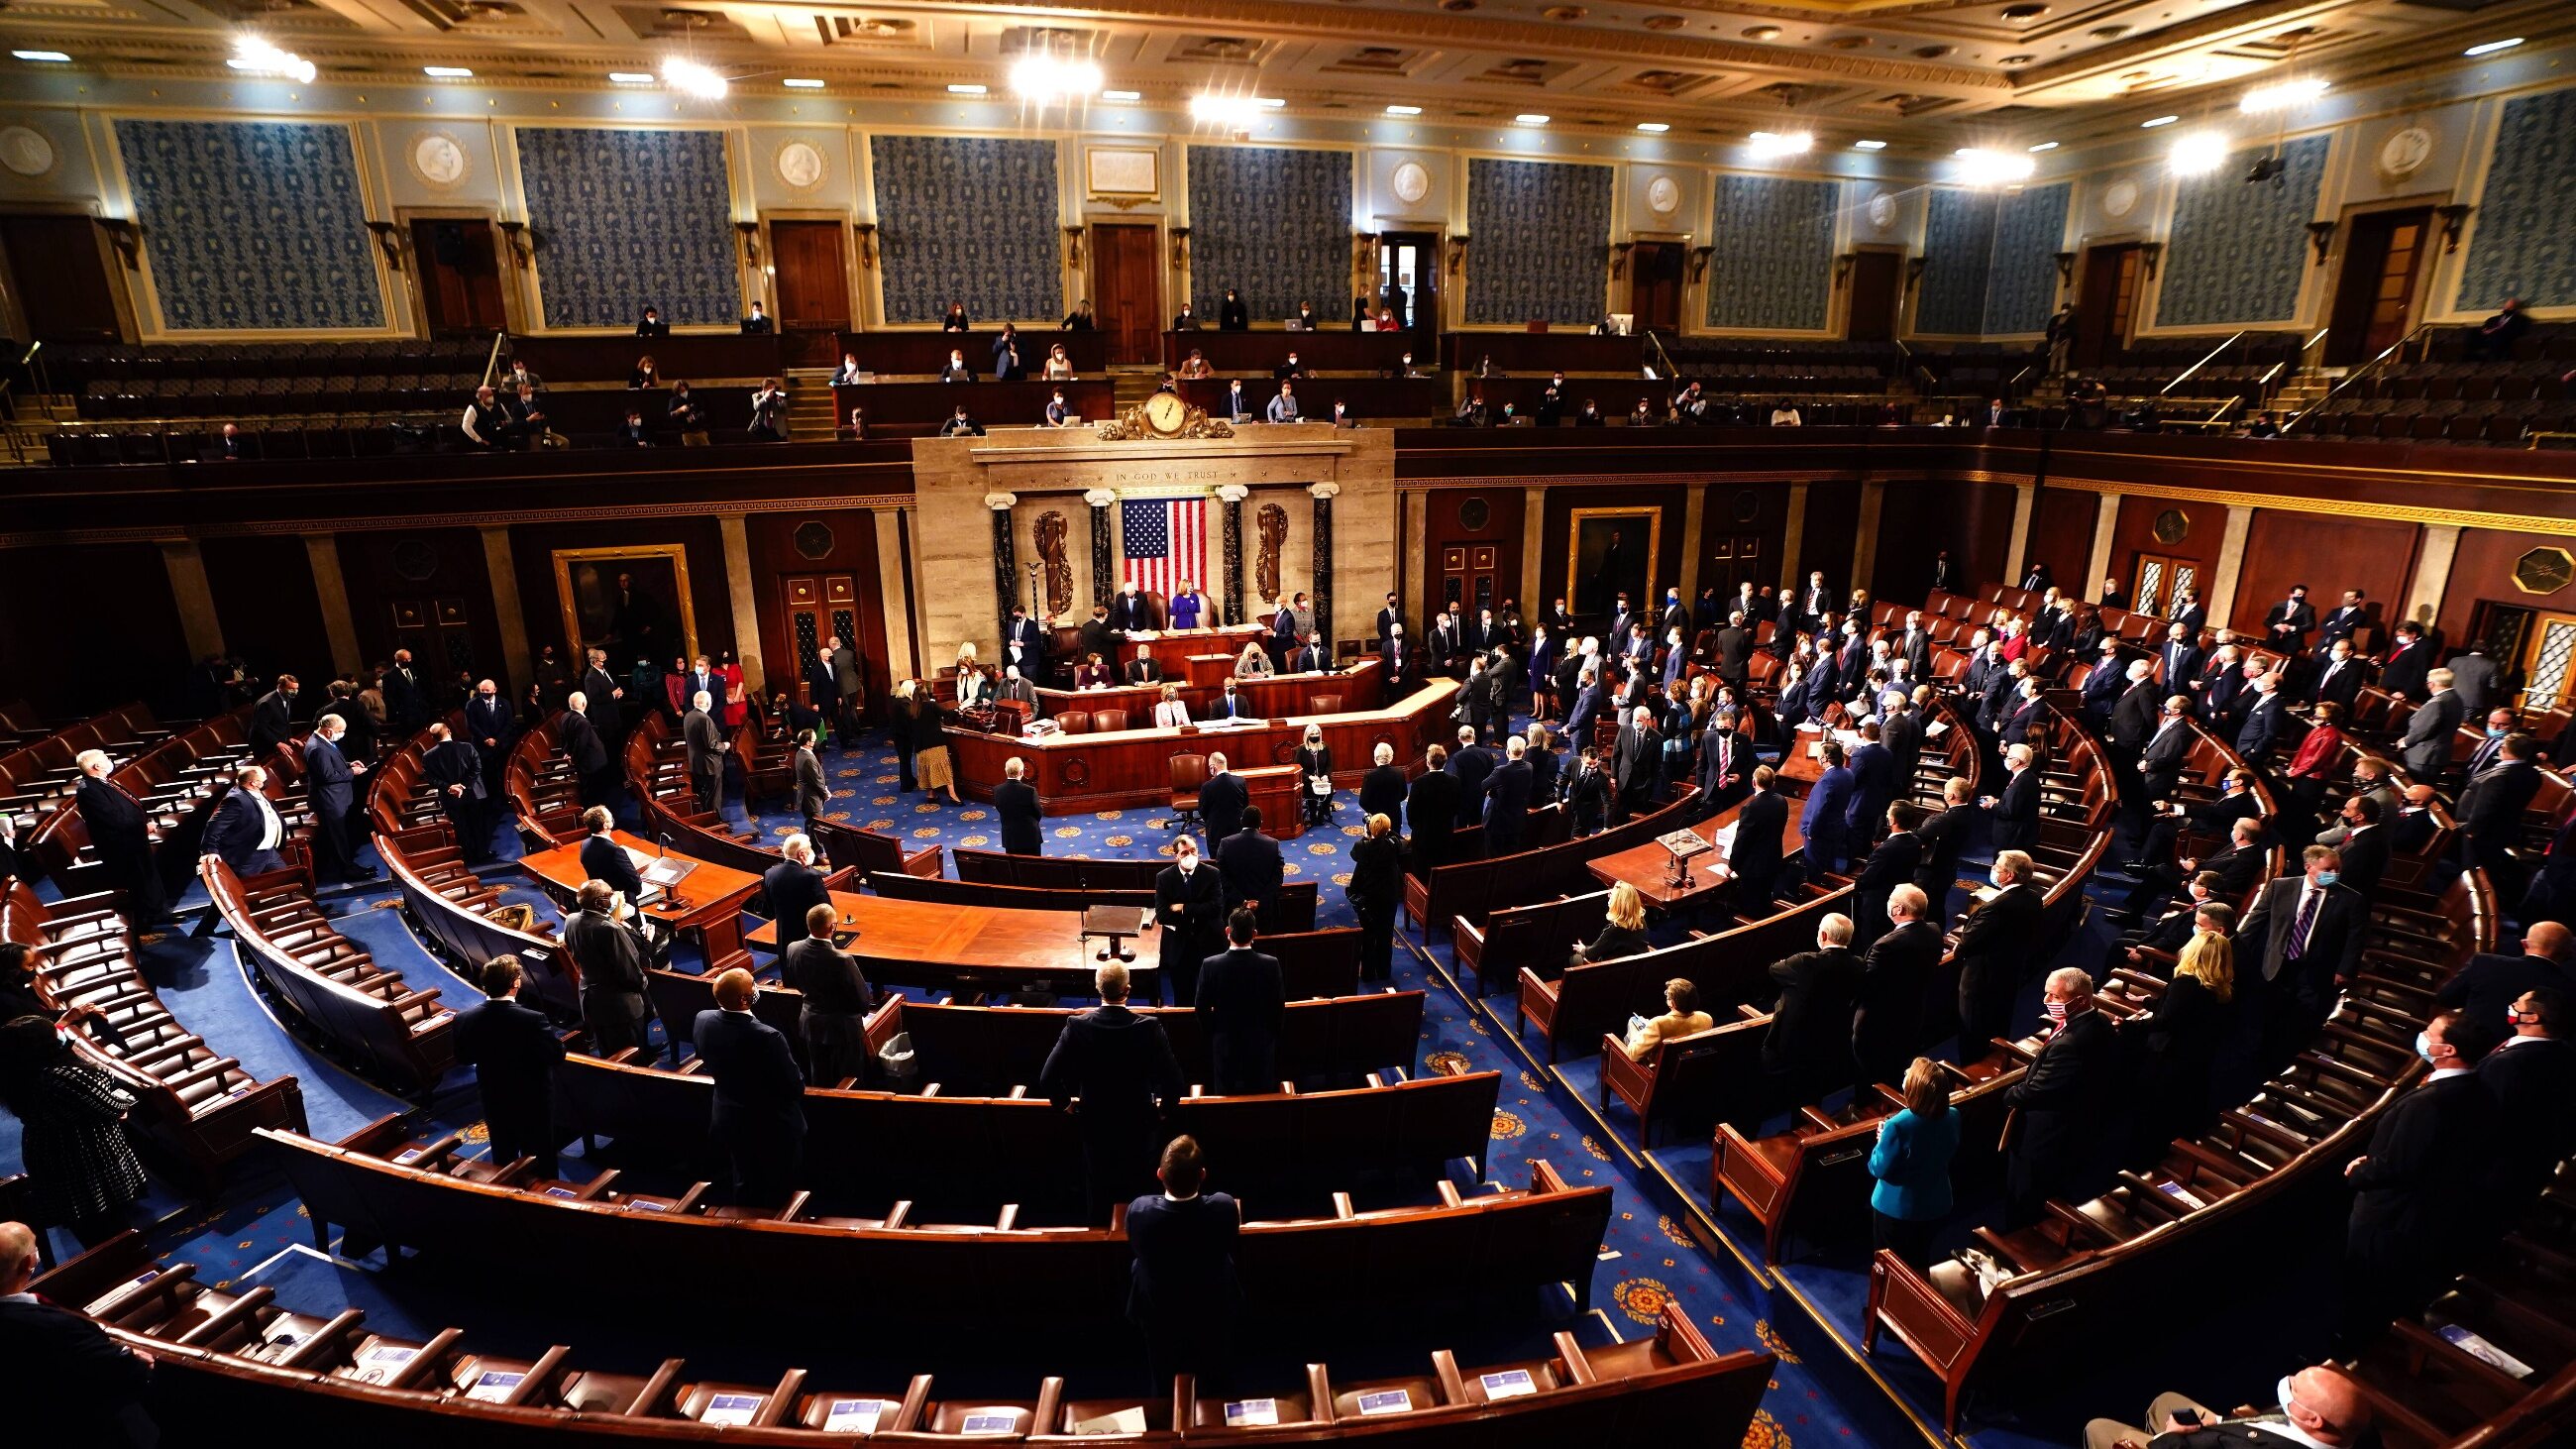 Сколько представителей в совете. Нижняя палата парламента США. Конгресс США 2 палаты. Палата представителей конгресса США. Конгресс США это парламент.